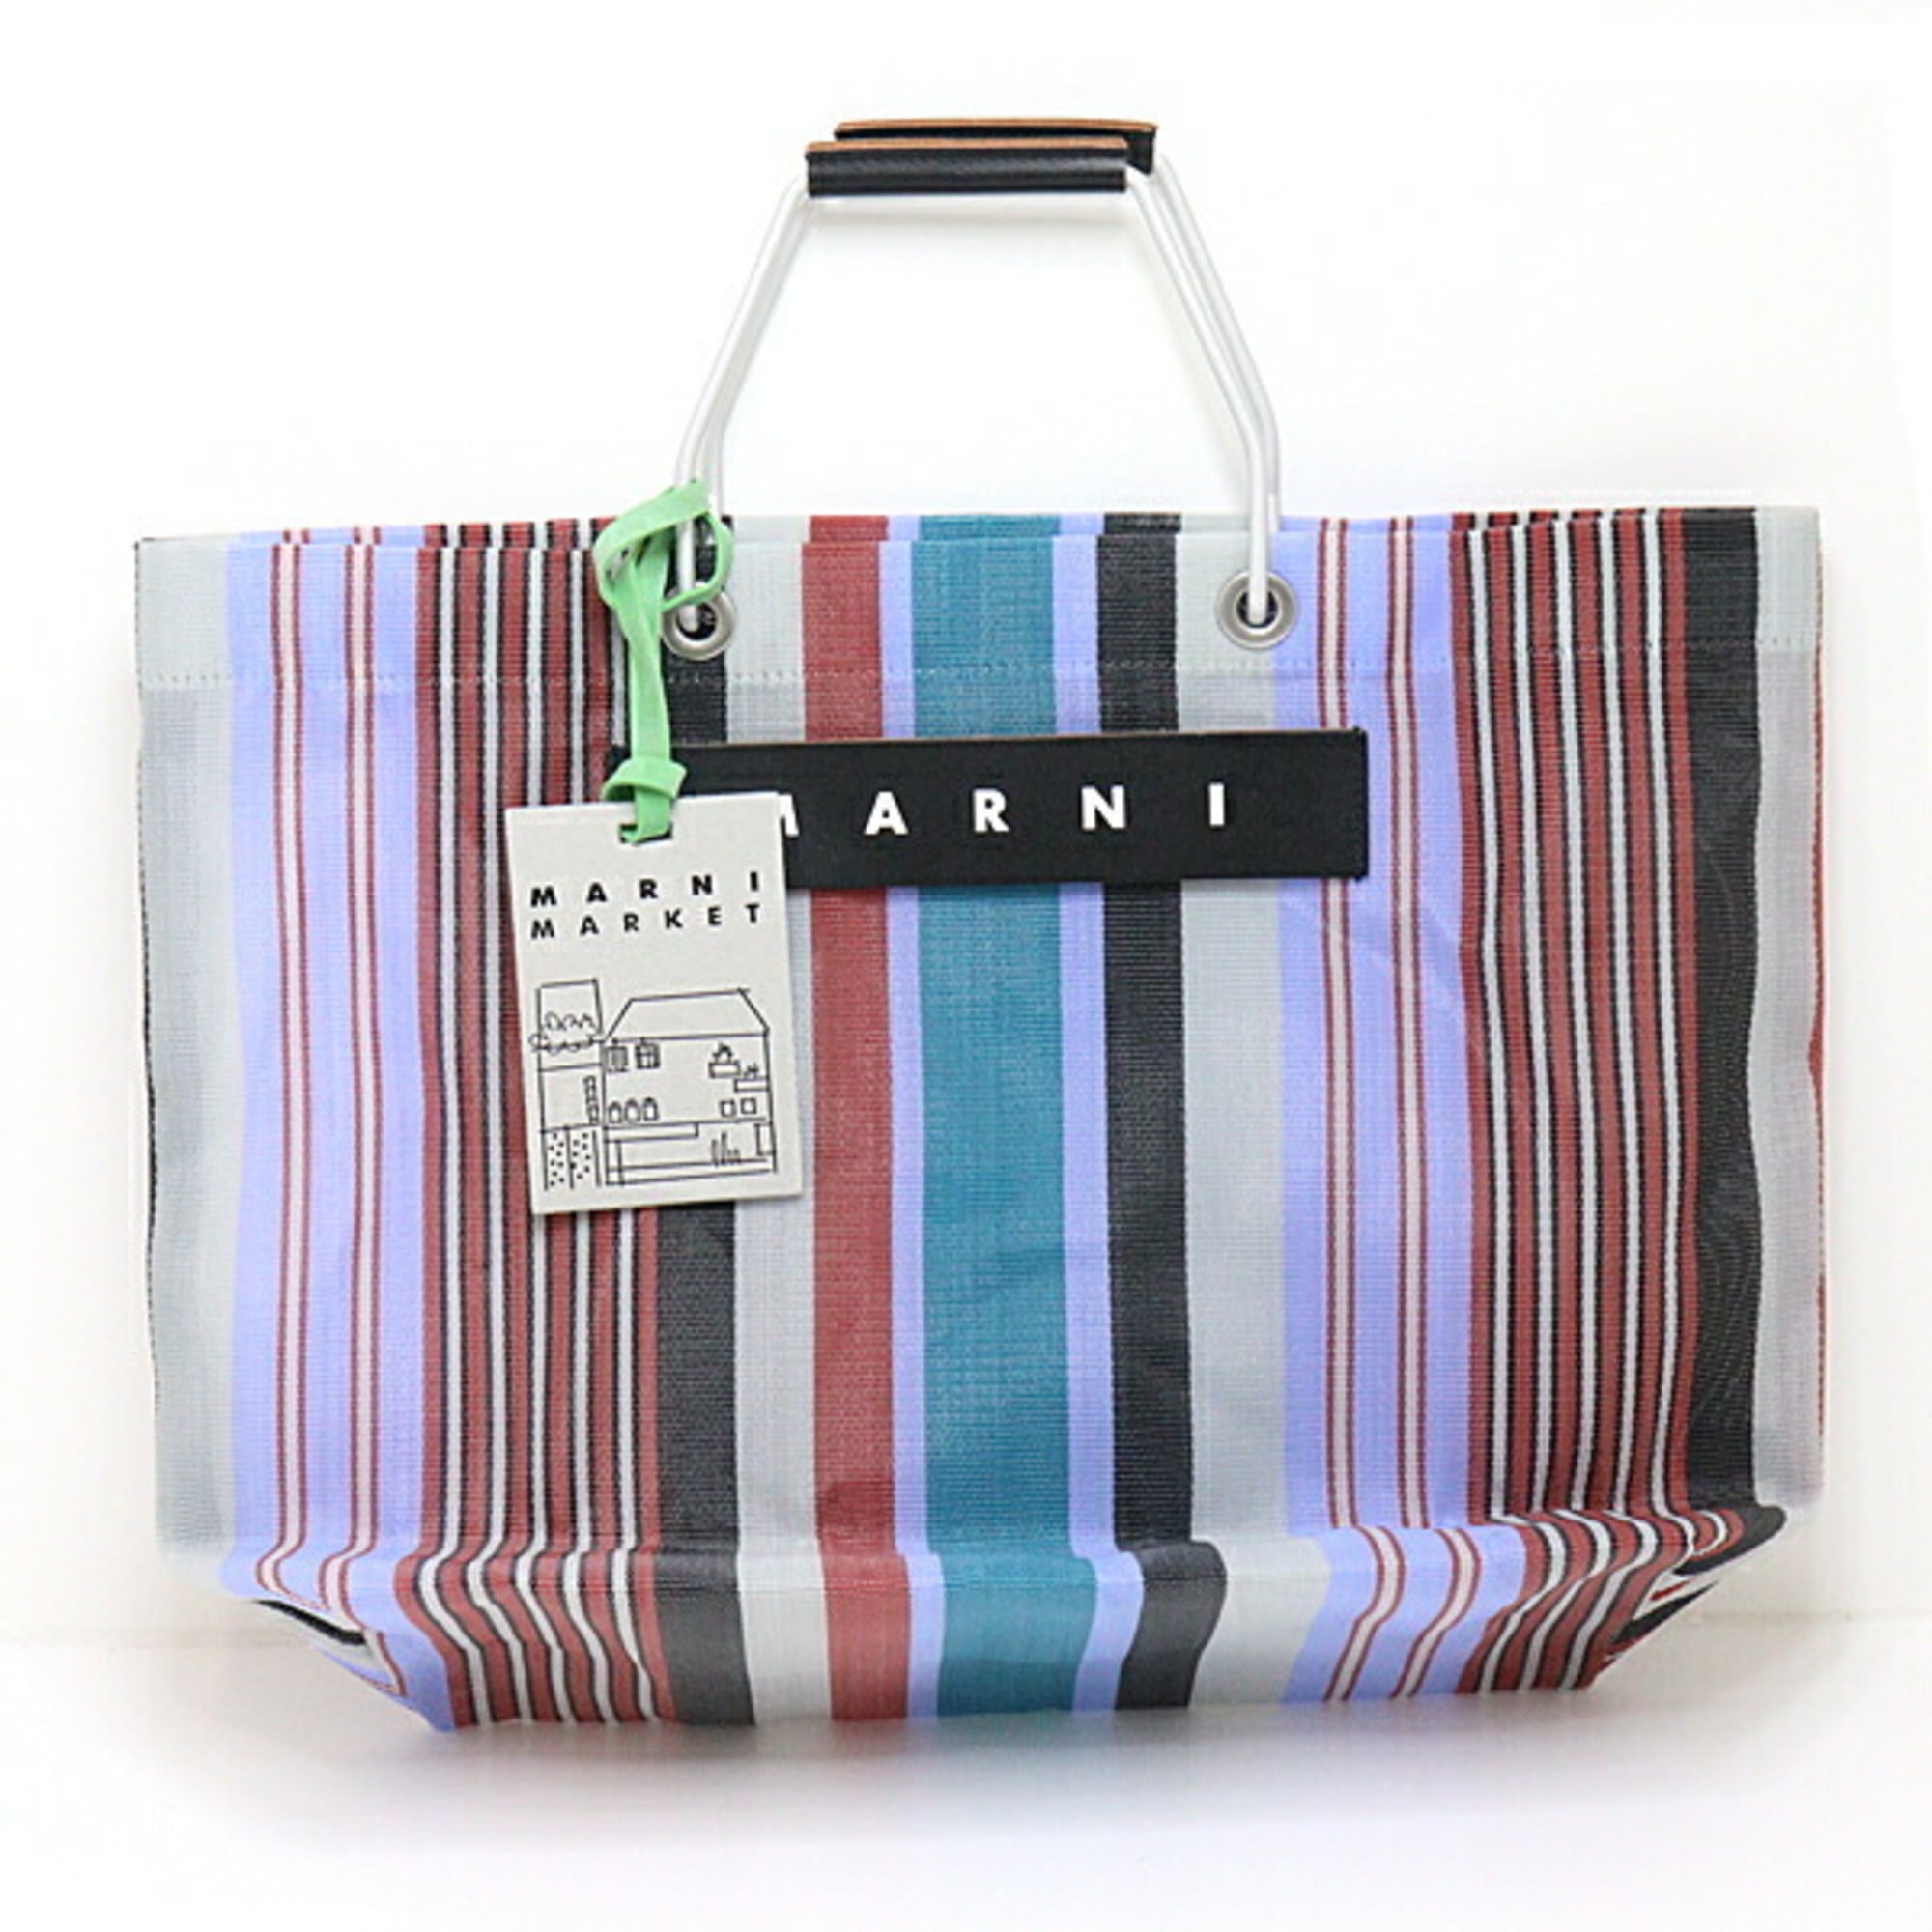 Pre-Owned MARNI Marni Market stripe medium bag tote multicolor light lime  SHMHR08A01 TN296STV07 (Like New)